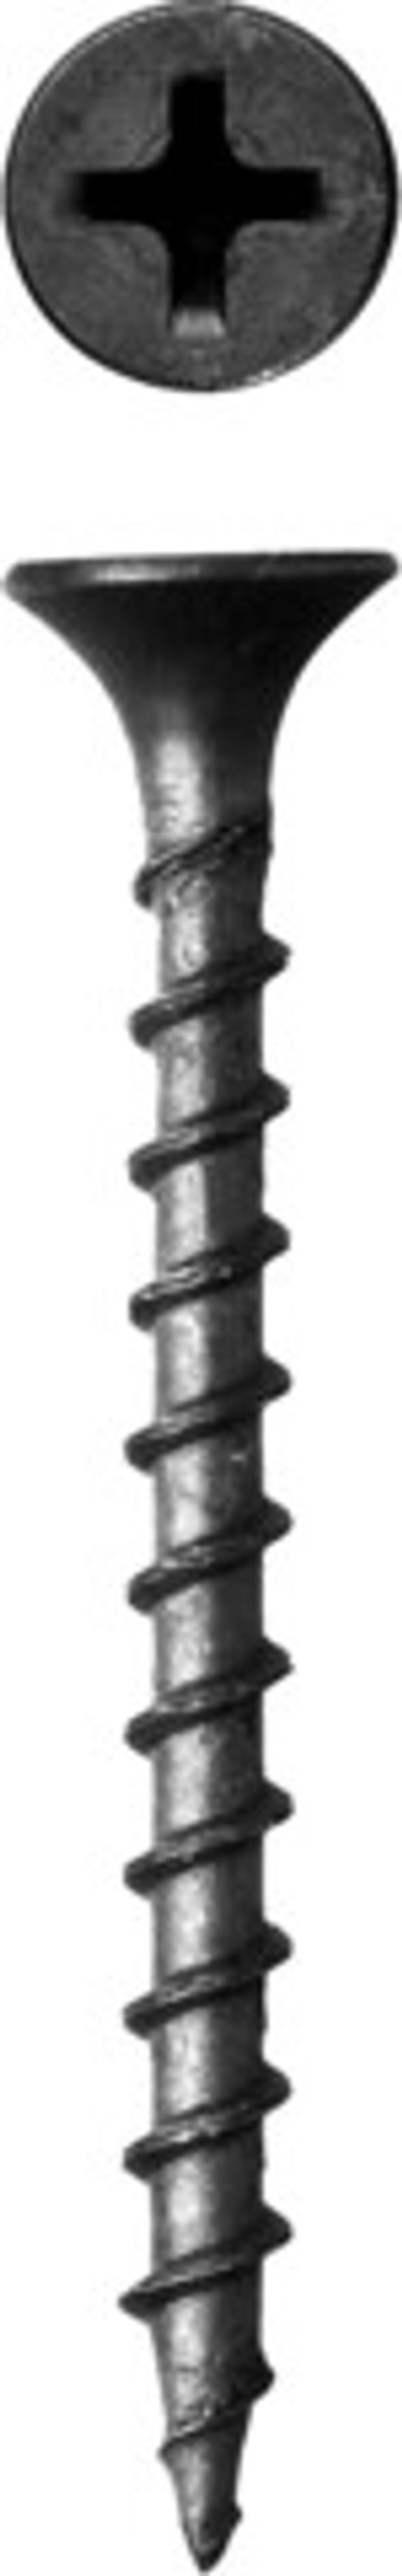 Саморез гипсокартон-металл 3,5*41мм (50шт/блистер) фосфатированные, ЗУБР Профессионал